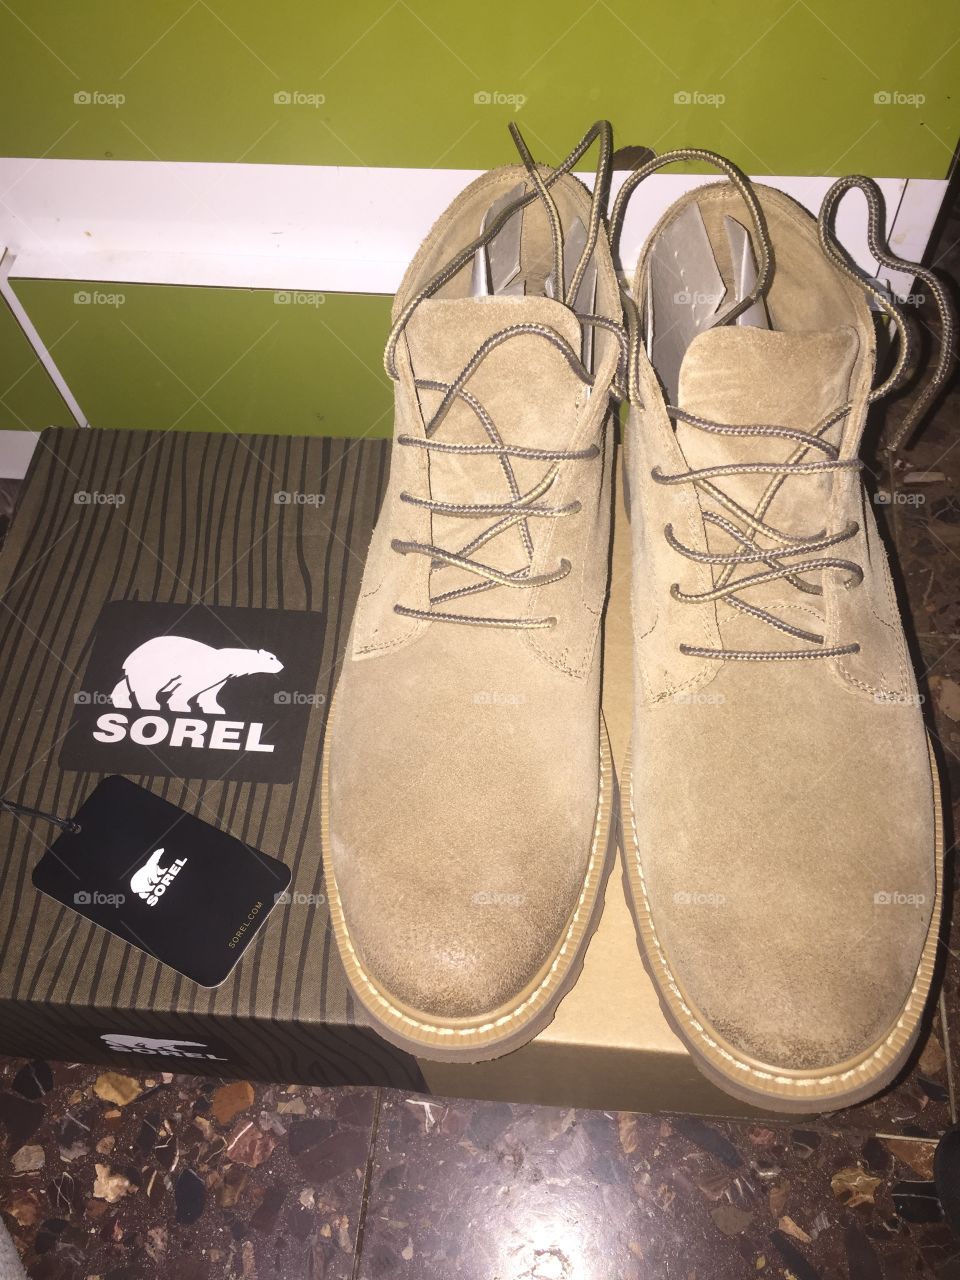 Sorel shoes 